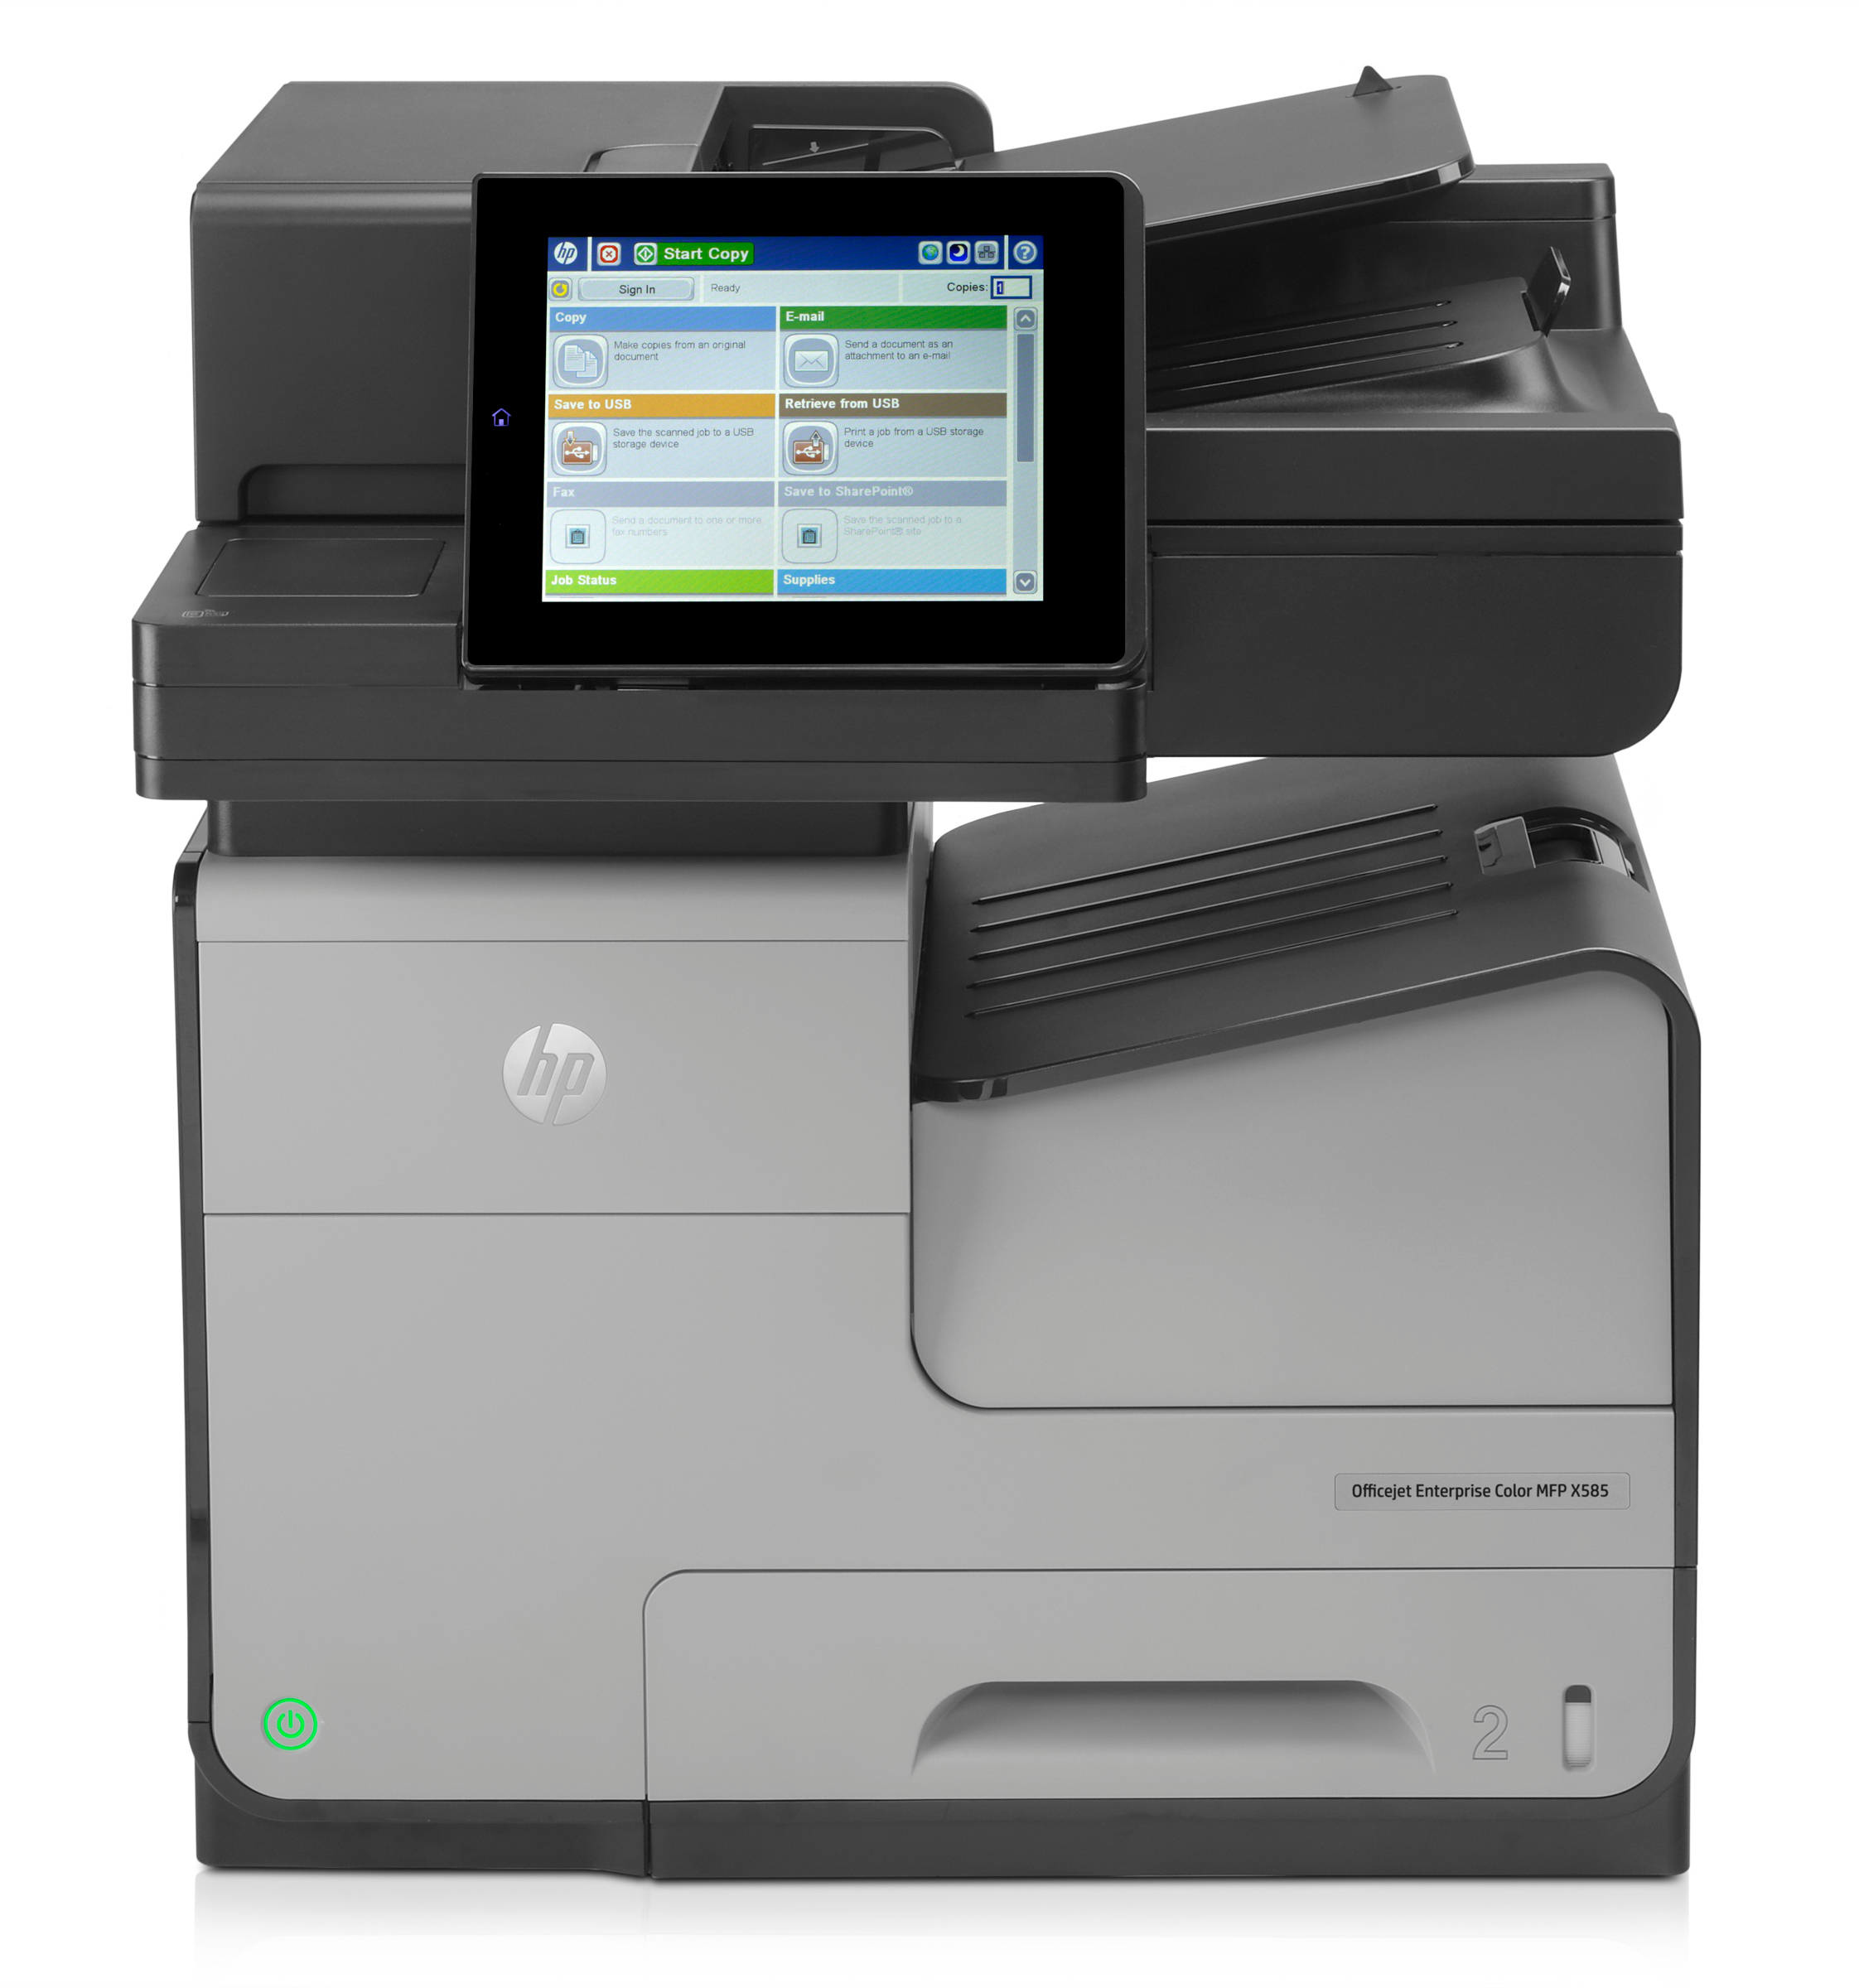 B5L05A HP OfficeJet Enterprise Colour X585F X585 Multifunction InkJet Printer - Refurbished with 3 months RTB warranty